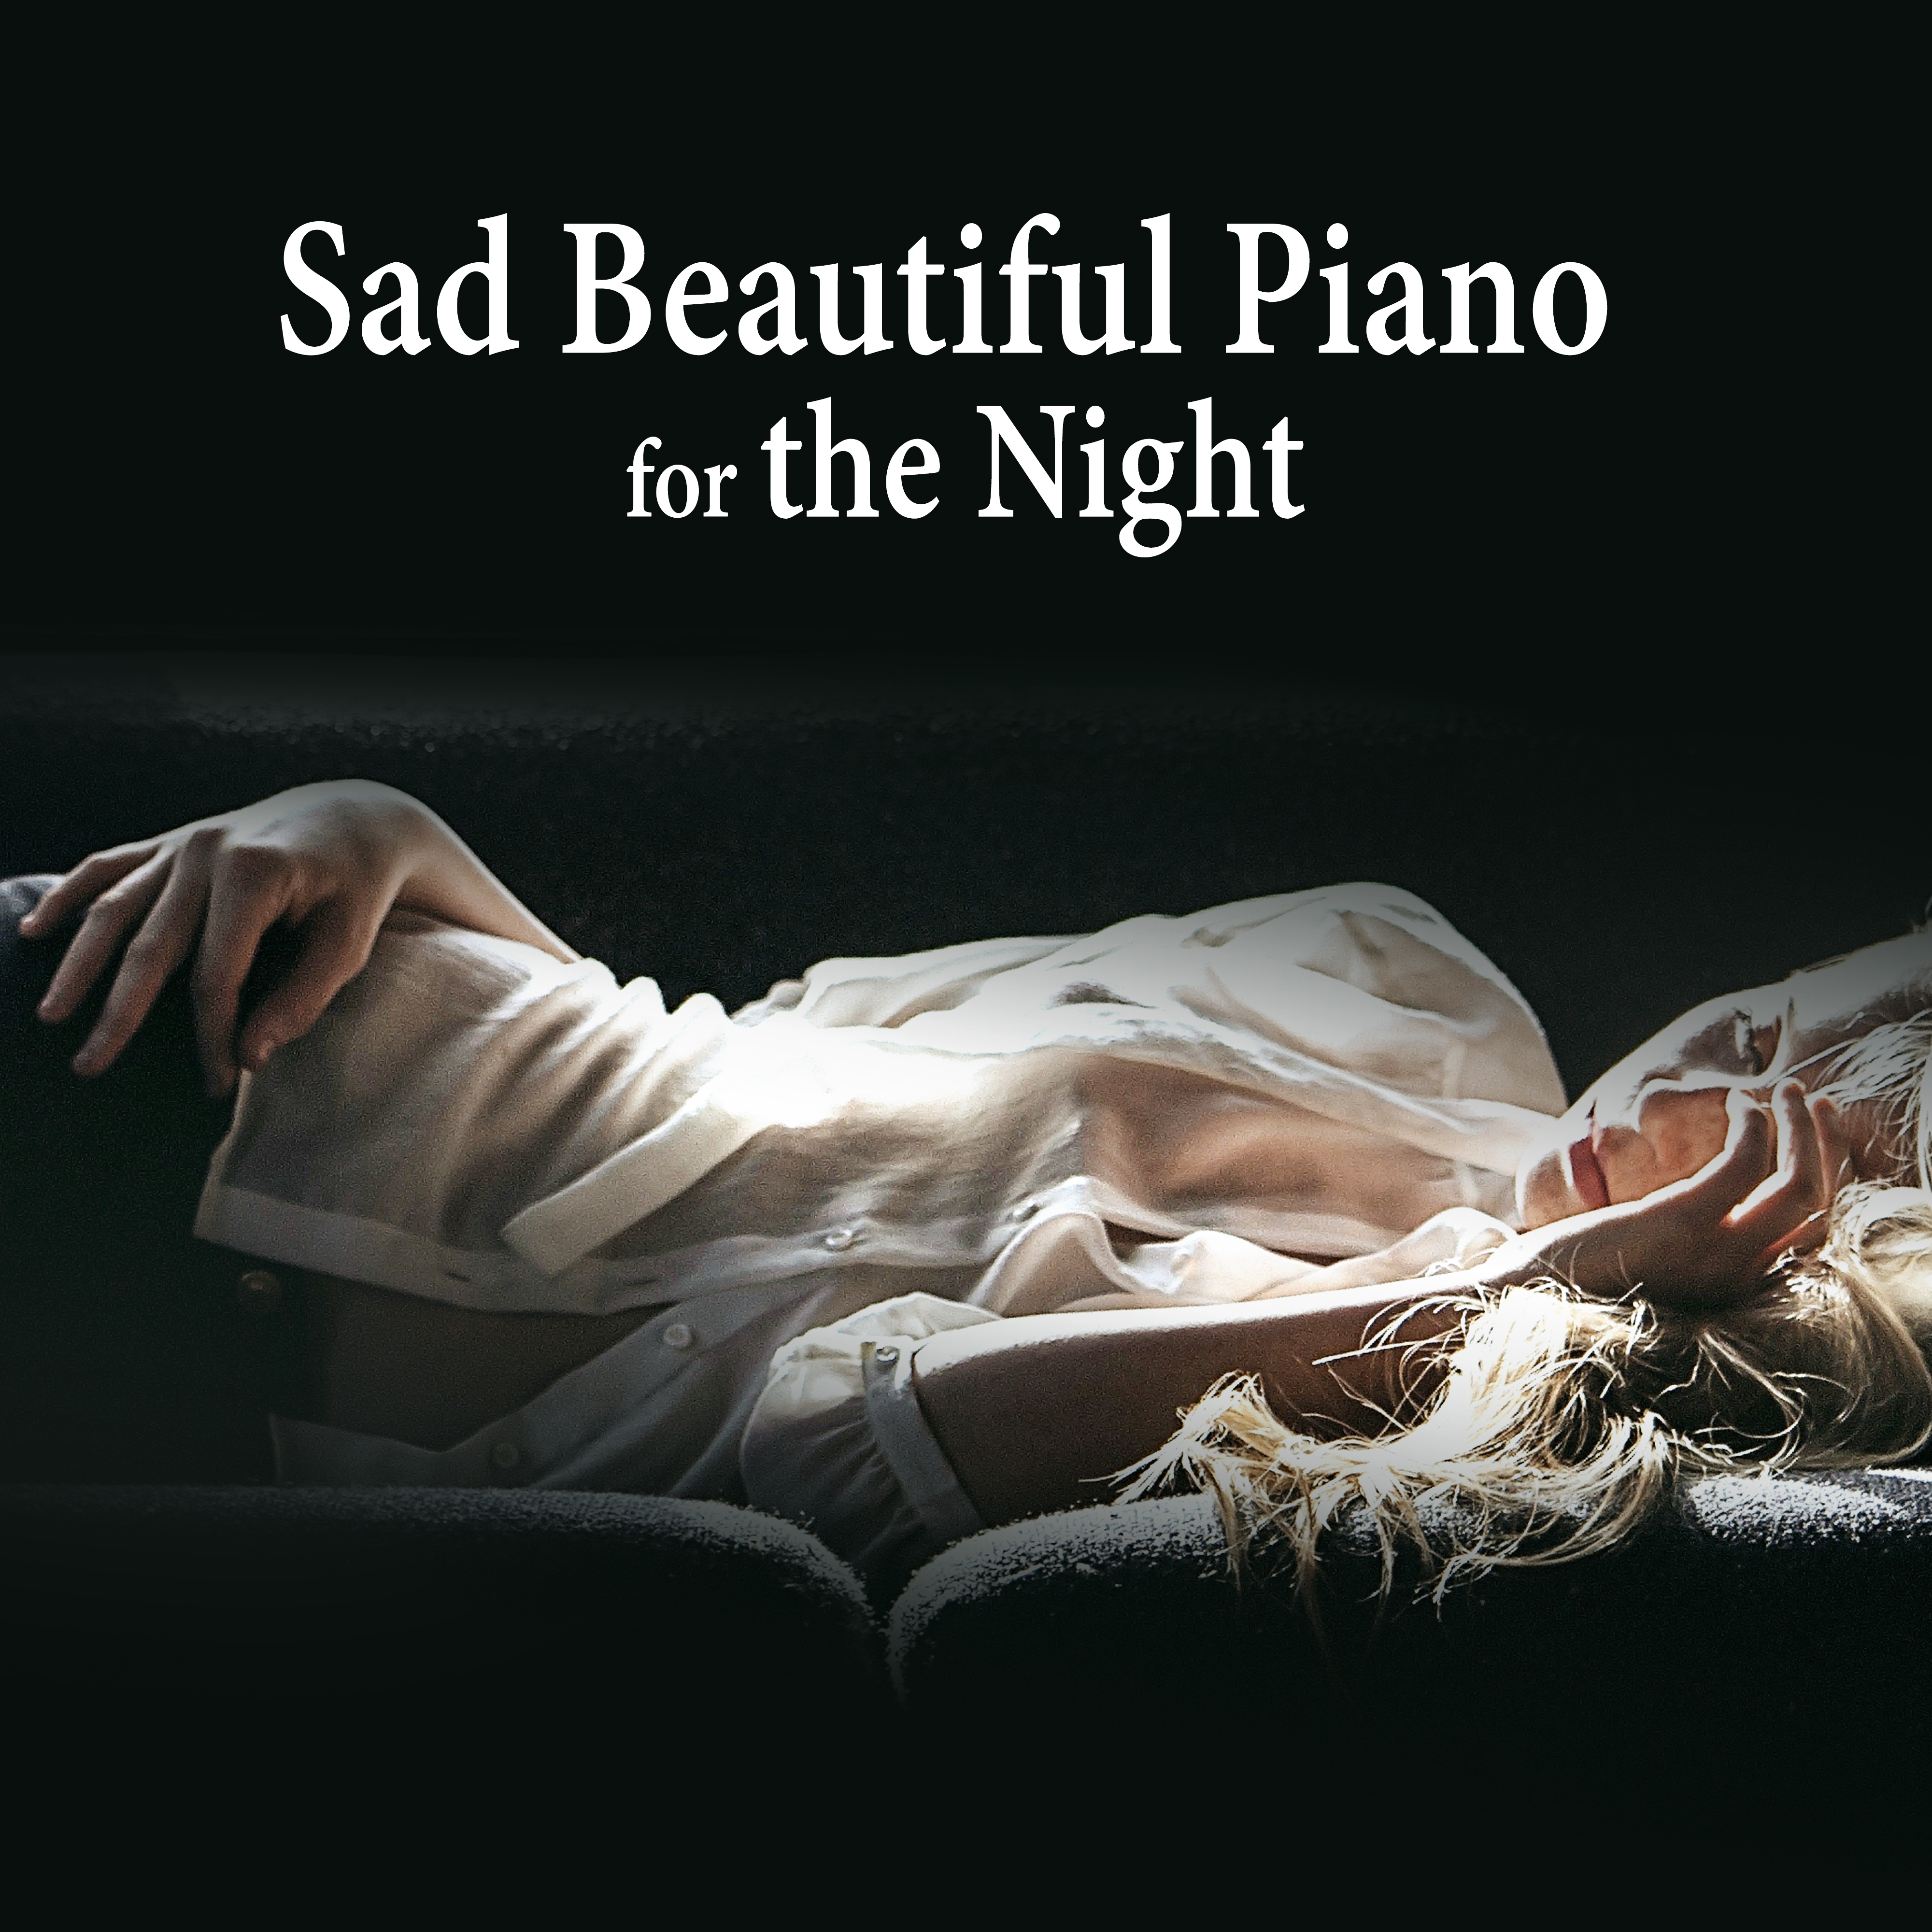 Sad Beautiful Piano for the Night